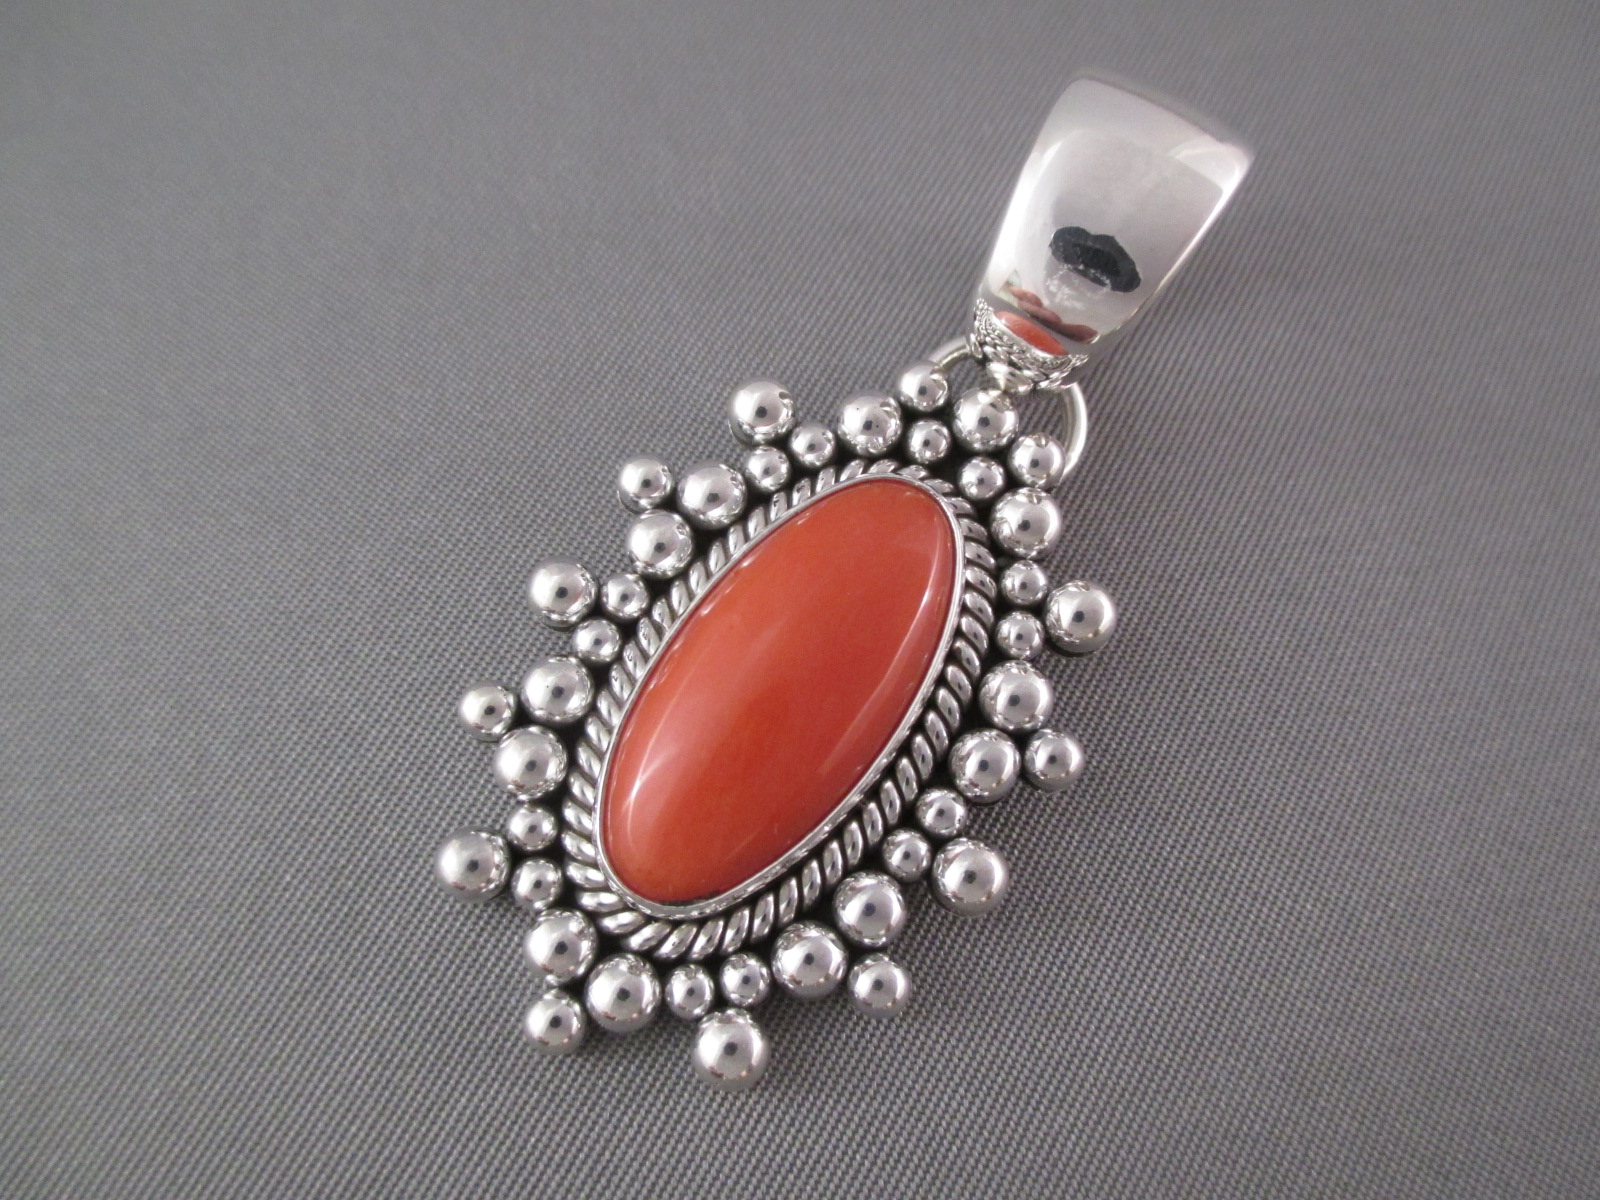 Native American Jewelry - Coral Pendant by Navajo jewelry artist, Artie Yellowhorse $775-